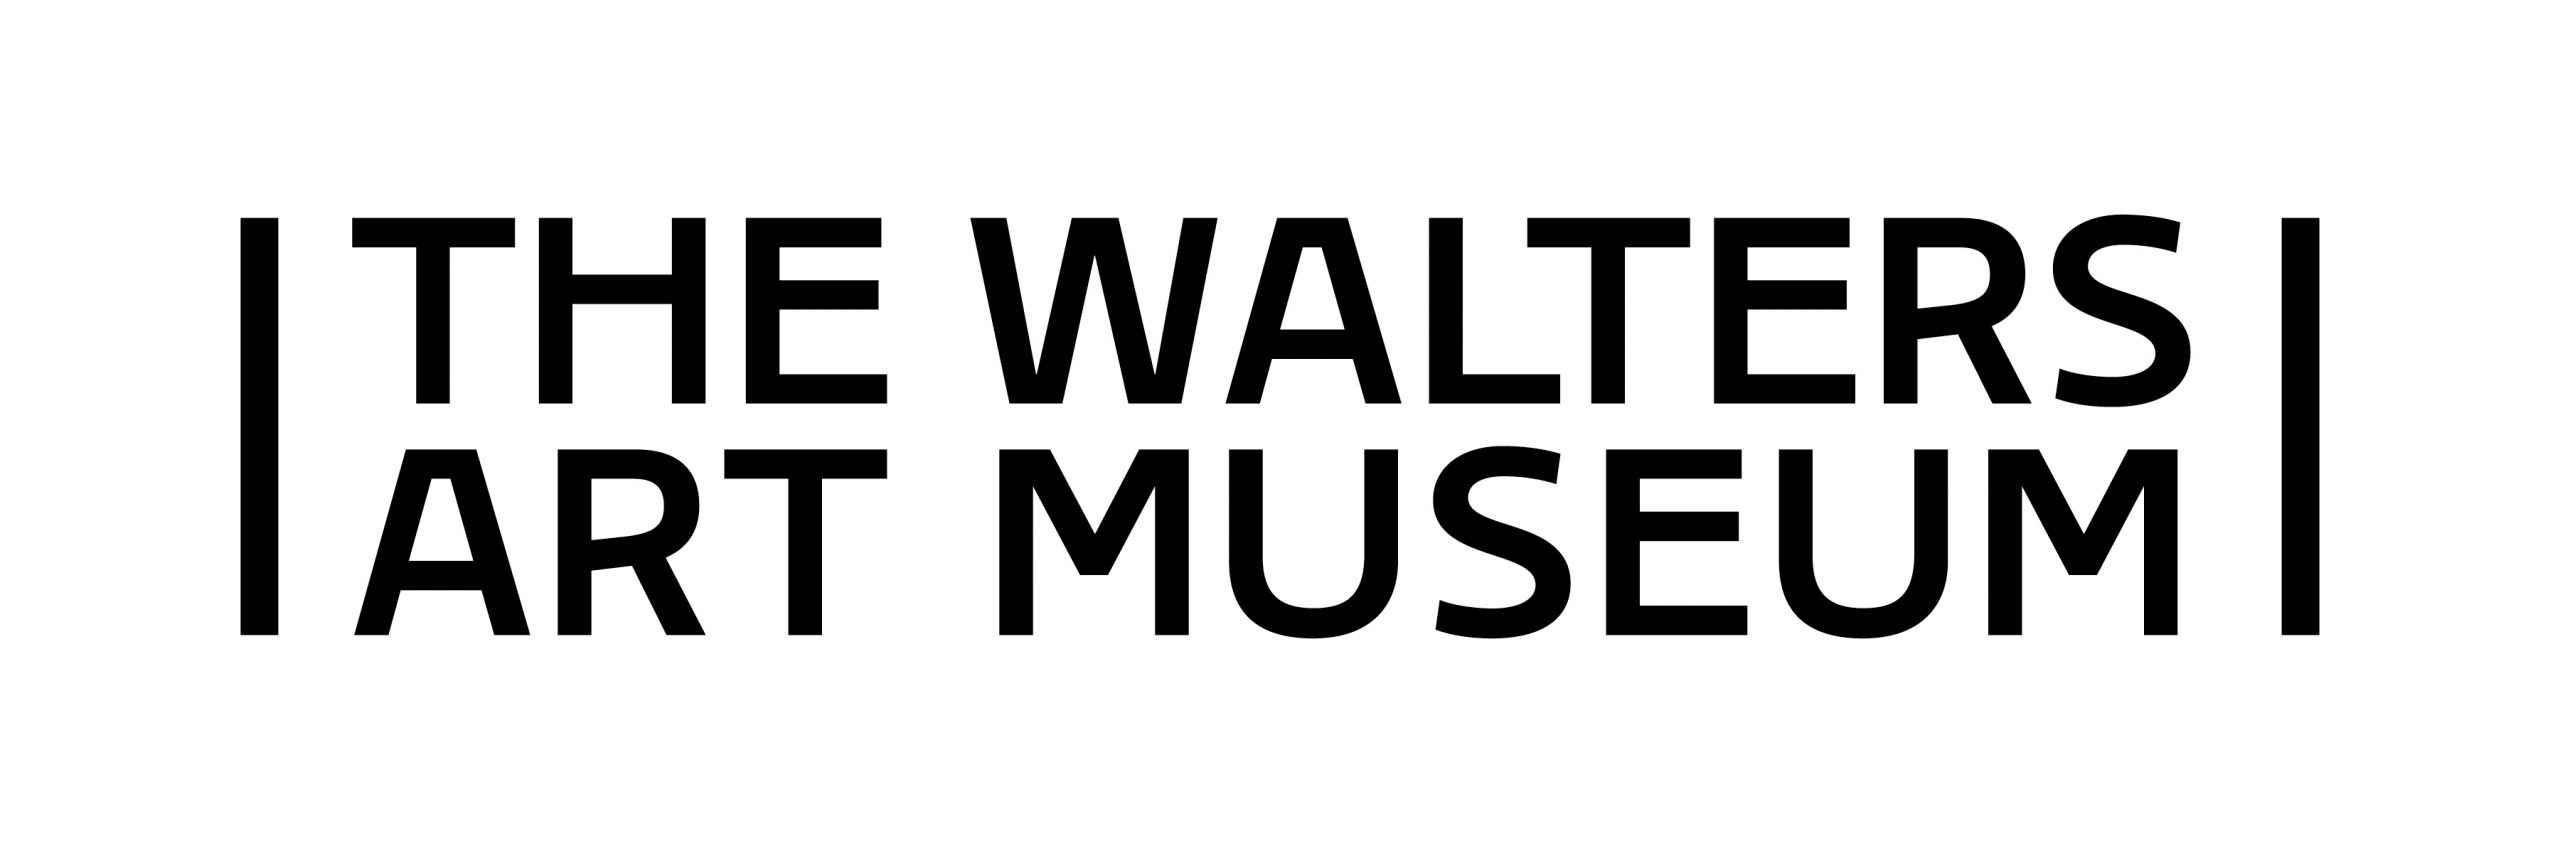 The Walters Art Museum logo